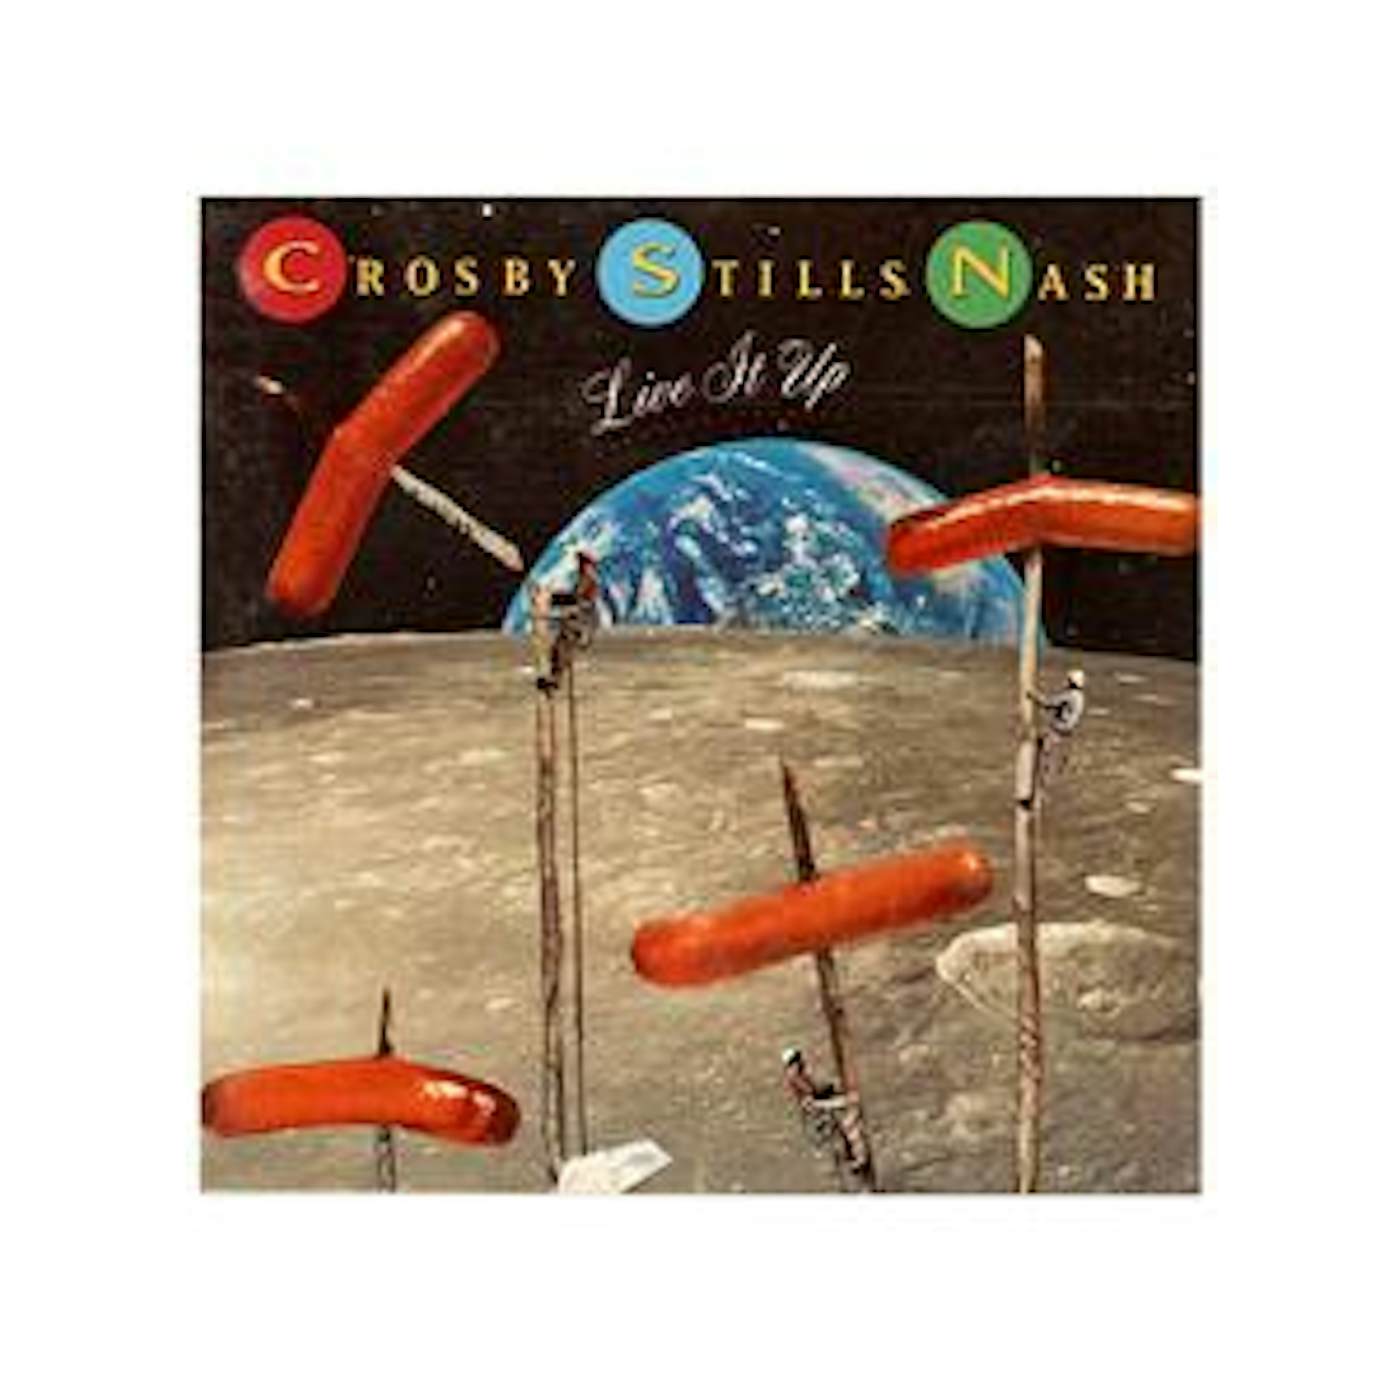 Crosby, Stills & Nash CSN "Live it Up" CD